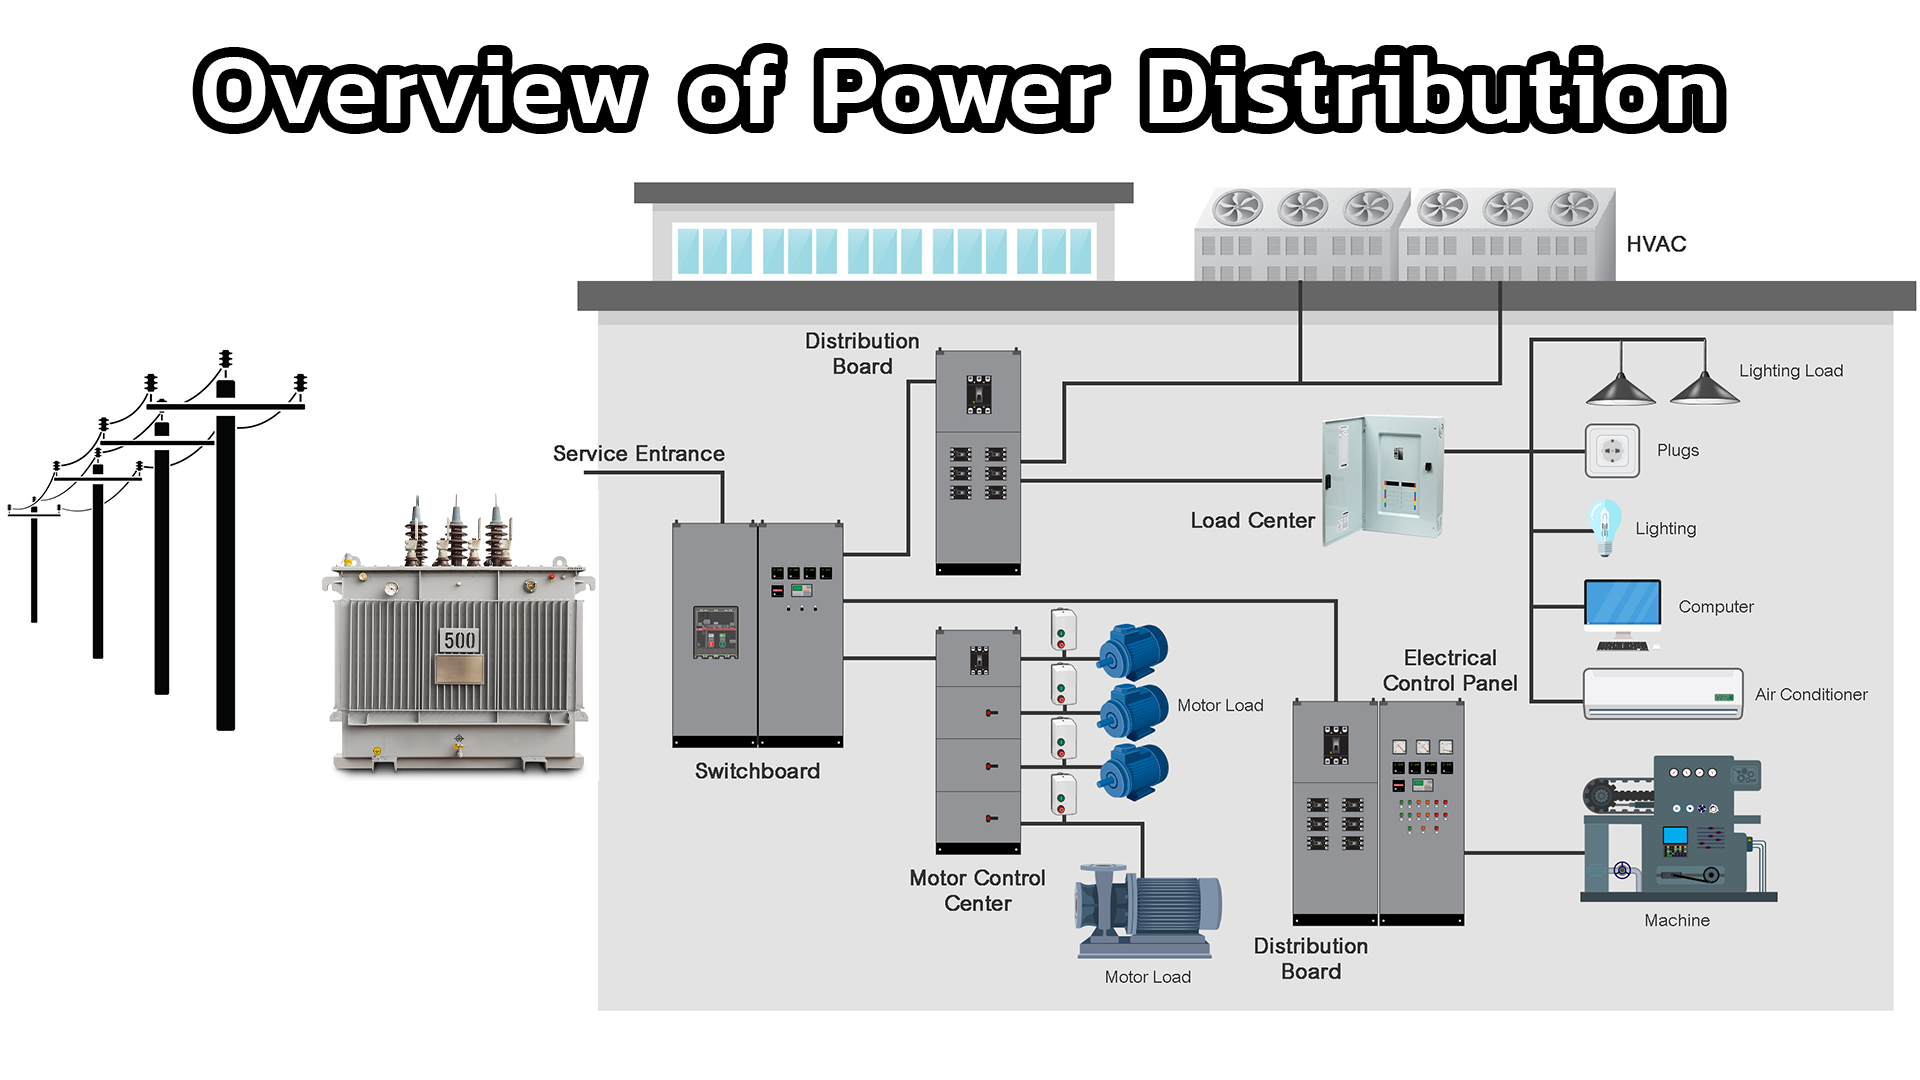 Medium voltage switchgear and low voltage distribution